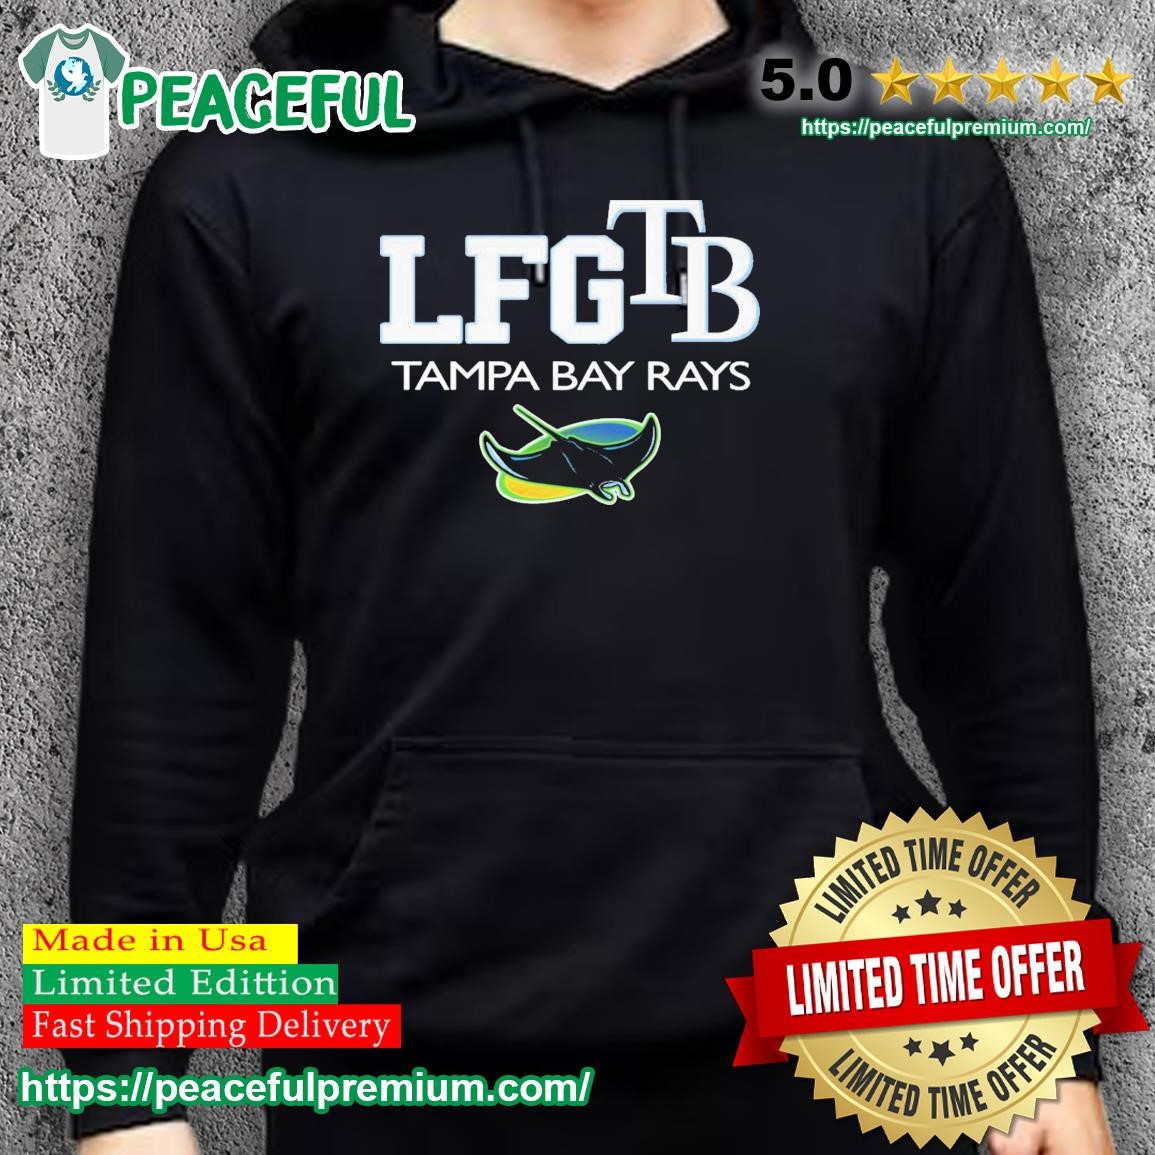 Tampa Bay Rays Devil Rays logo shirt, hoodie, sweater, long sleeve